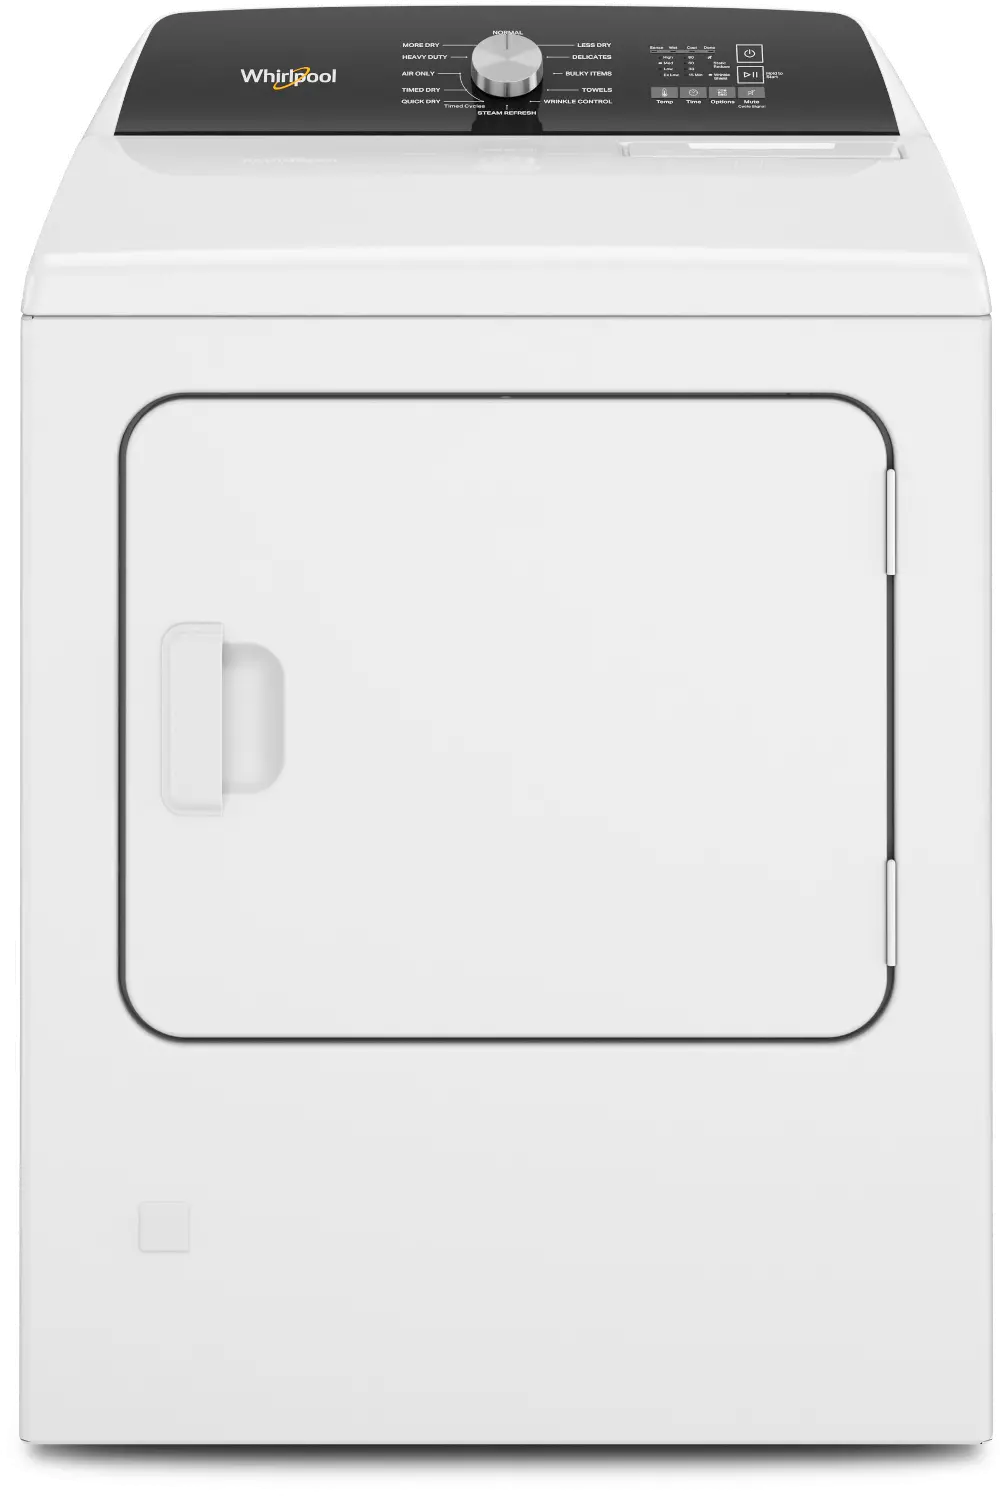 WGD5050LW Whirlpool Gas Dryer W5050 - White, 7.0 cu. ft.-1